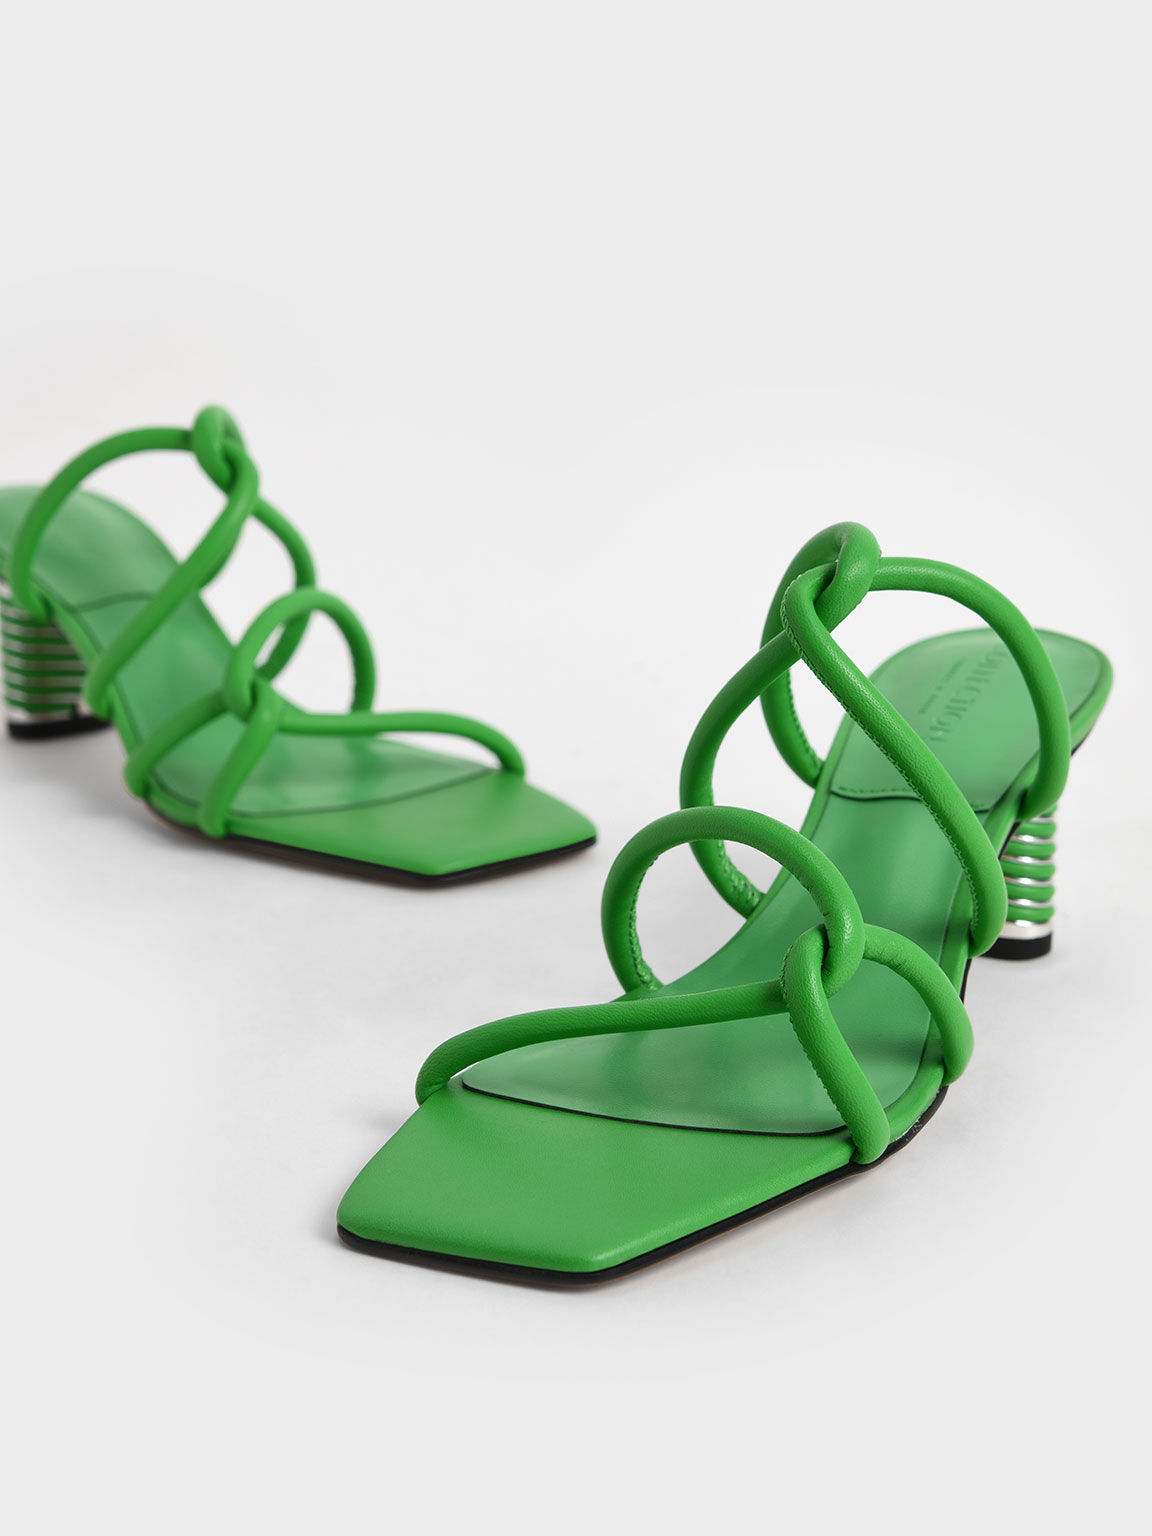 Leather Tubular Strap Heeled Sandals, Green, hi-res